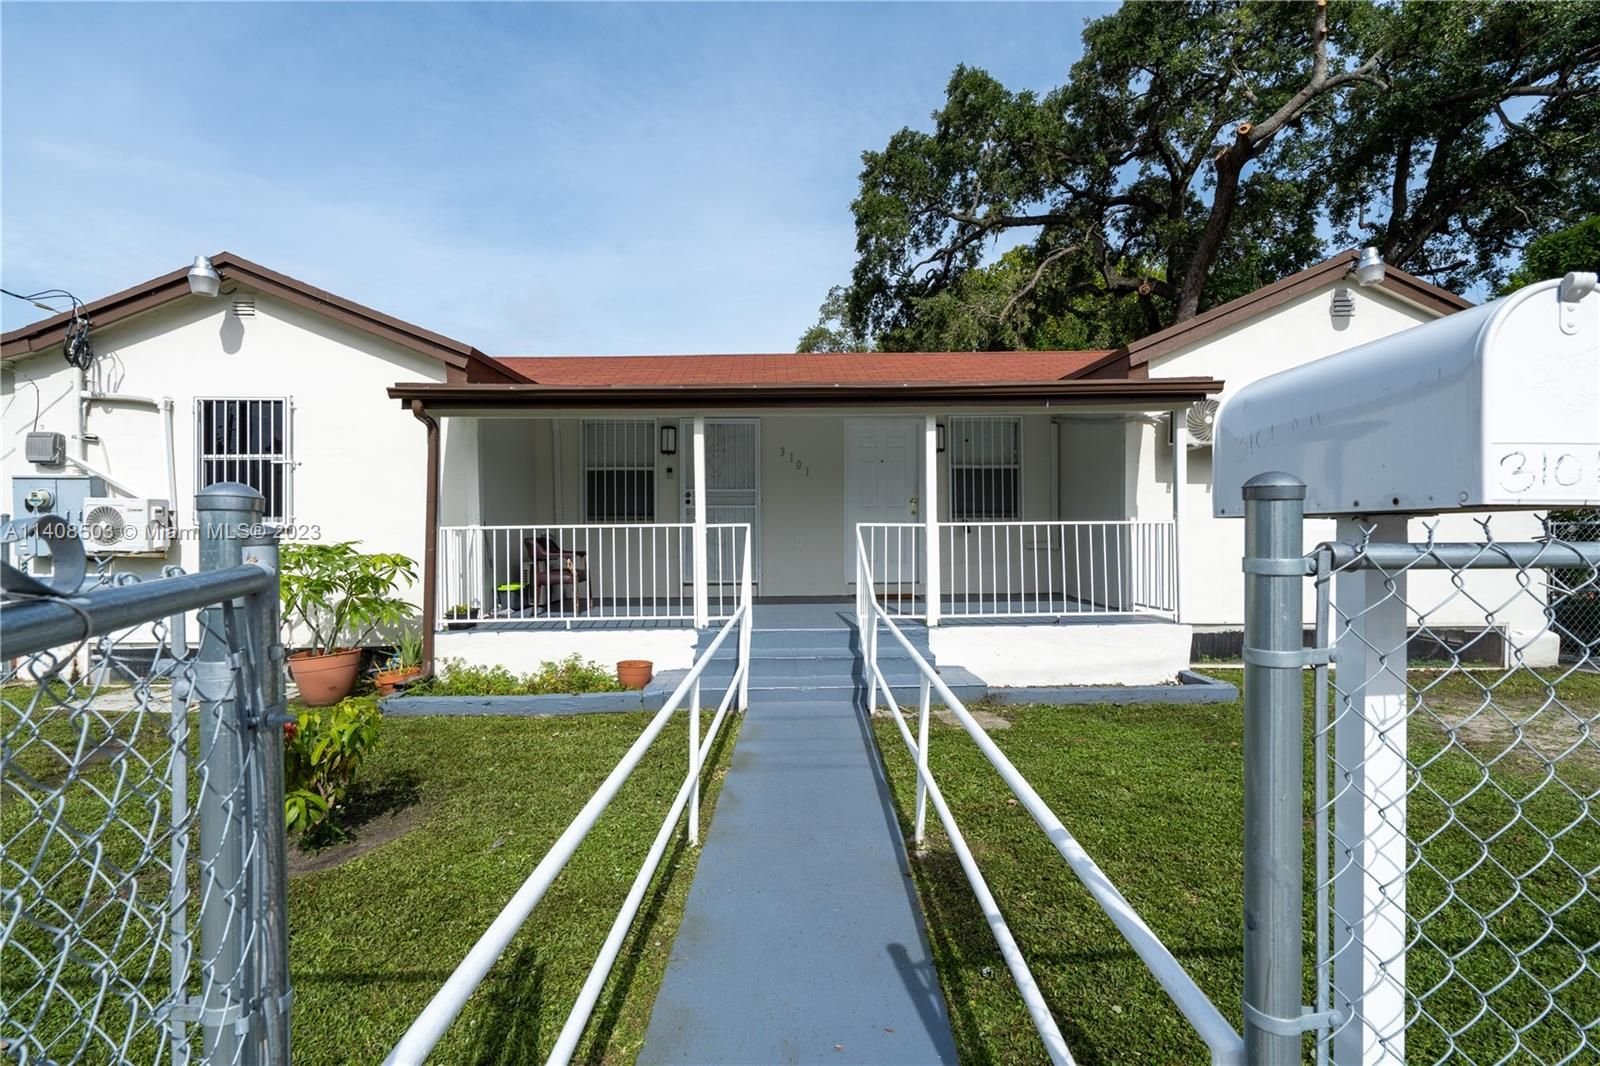 Real estate property located at 3101 28th St, Miami-Dade County, Miami, FL